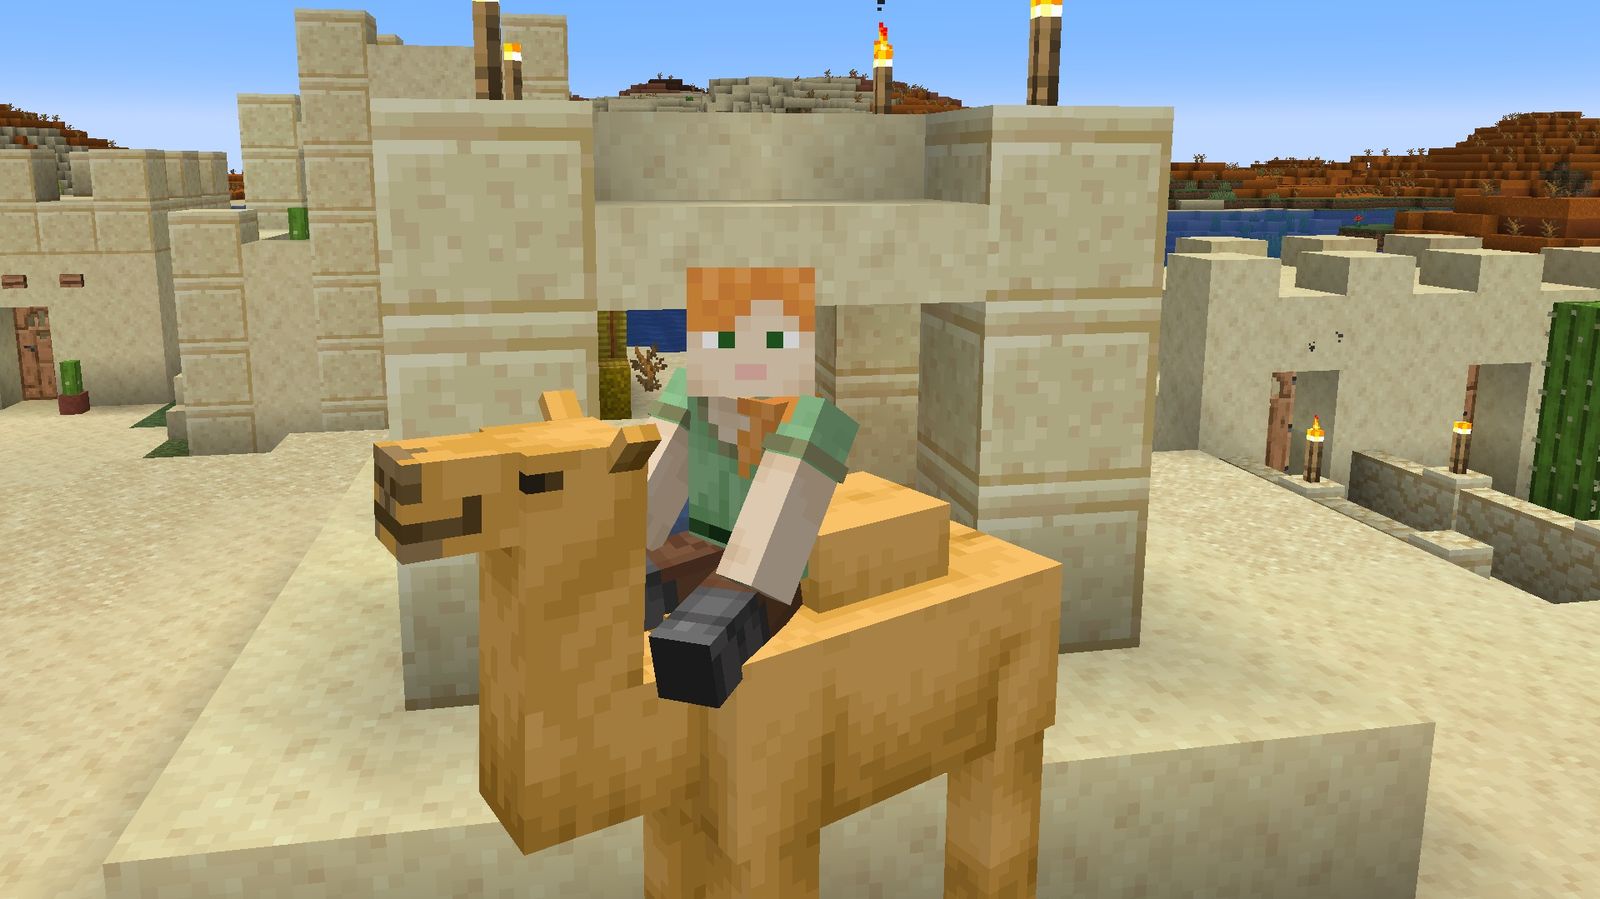 Alex character riding a camel in desert village